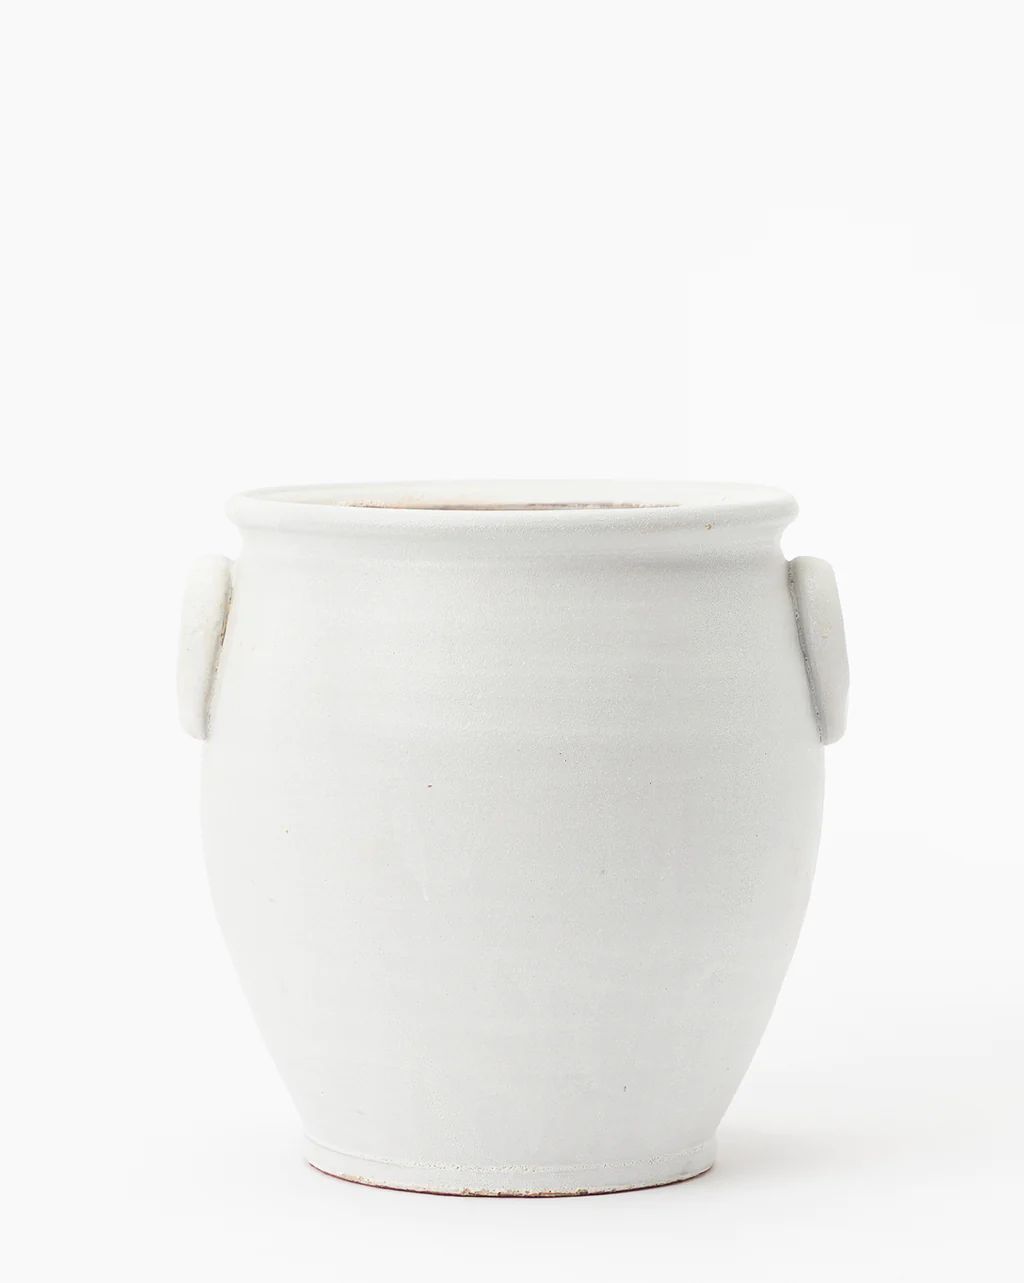 Adras Handled Vase | McGee & Co.